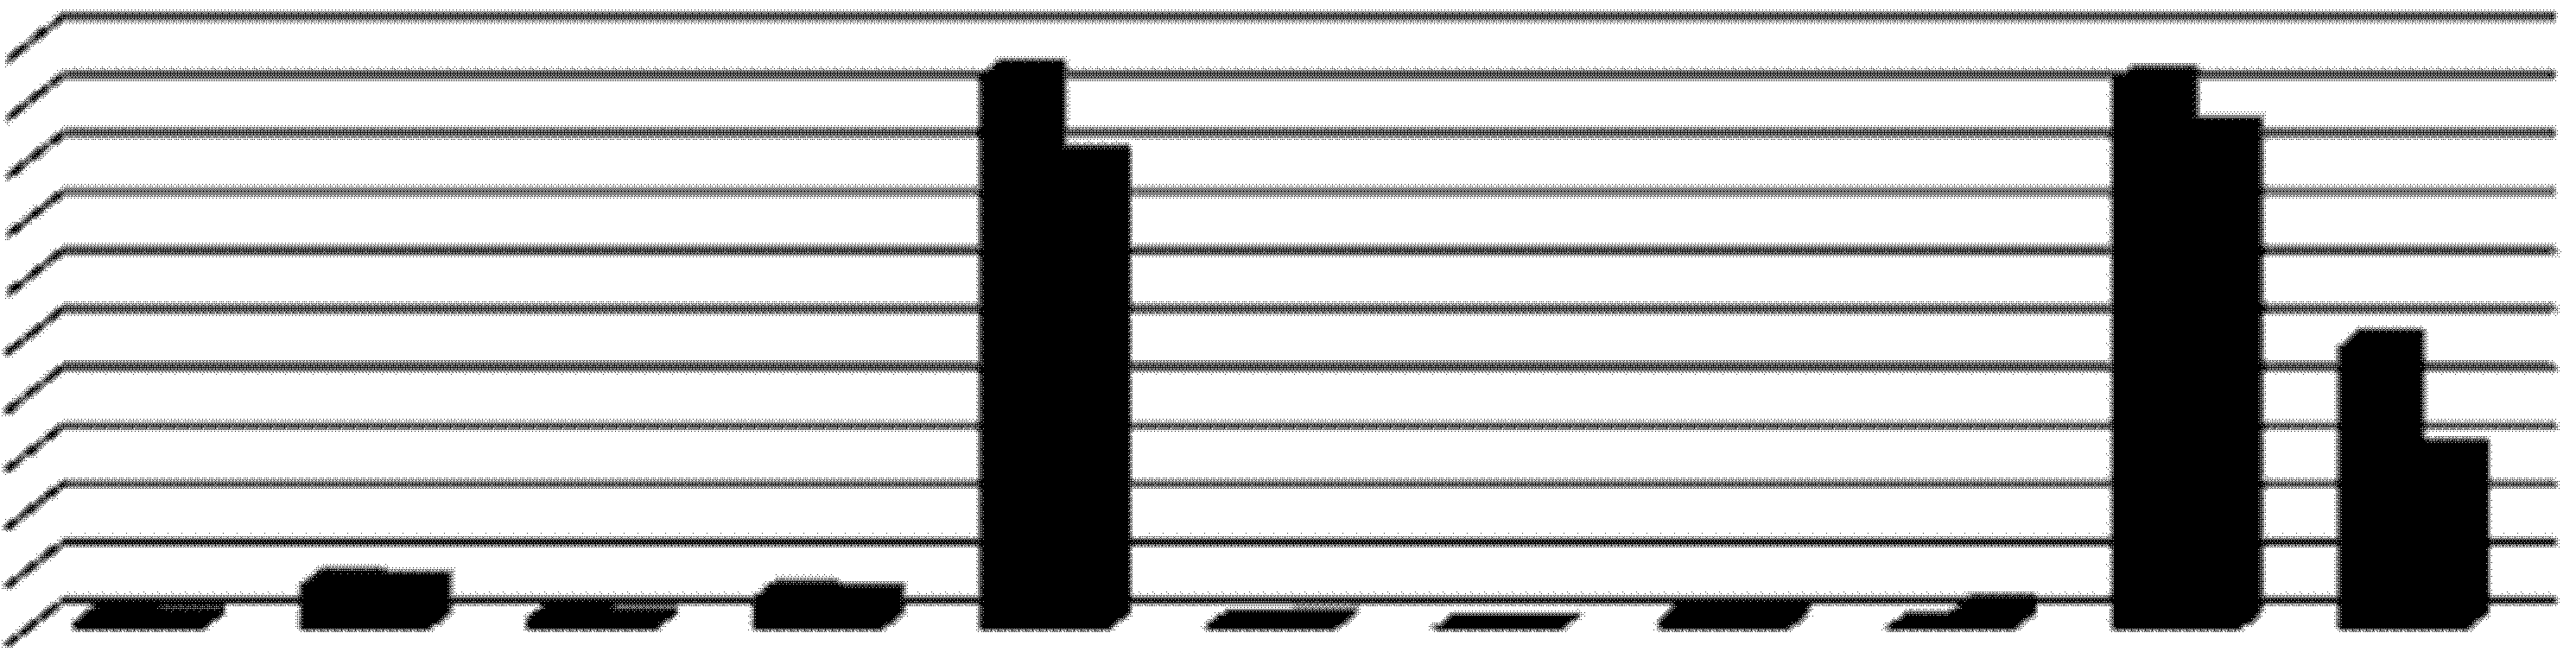 Grafik VI.2. Perbandingan Realisasi Pajak Daerah TA 2014-2015 (dalam milyar rupiah) 20 18 16 14 12 10 8 6 4 2 0 18,99 18,76 17,04 16,03 9,725 5,983 1,562 0,436 1,142 0,319 2.